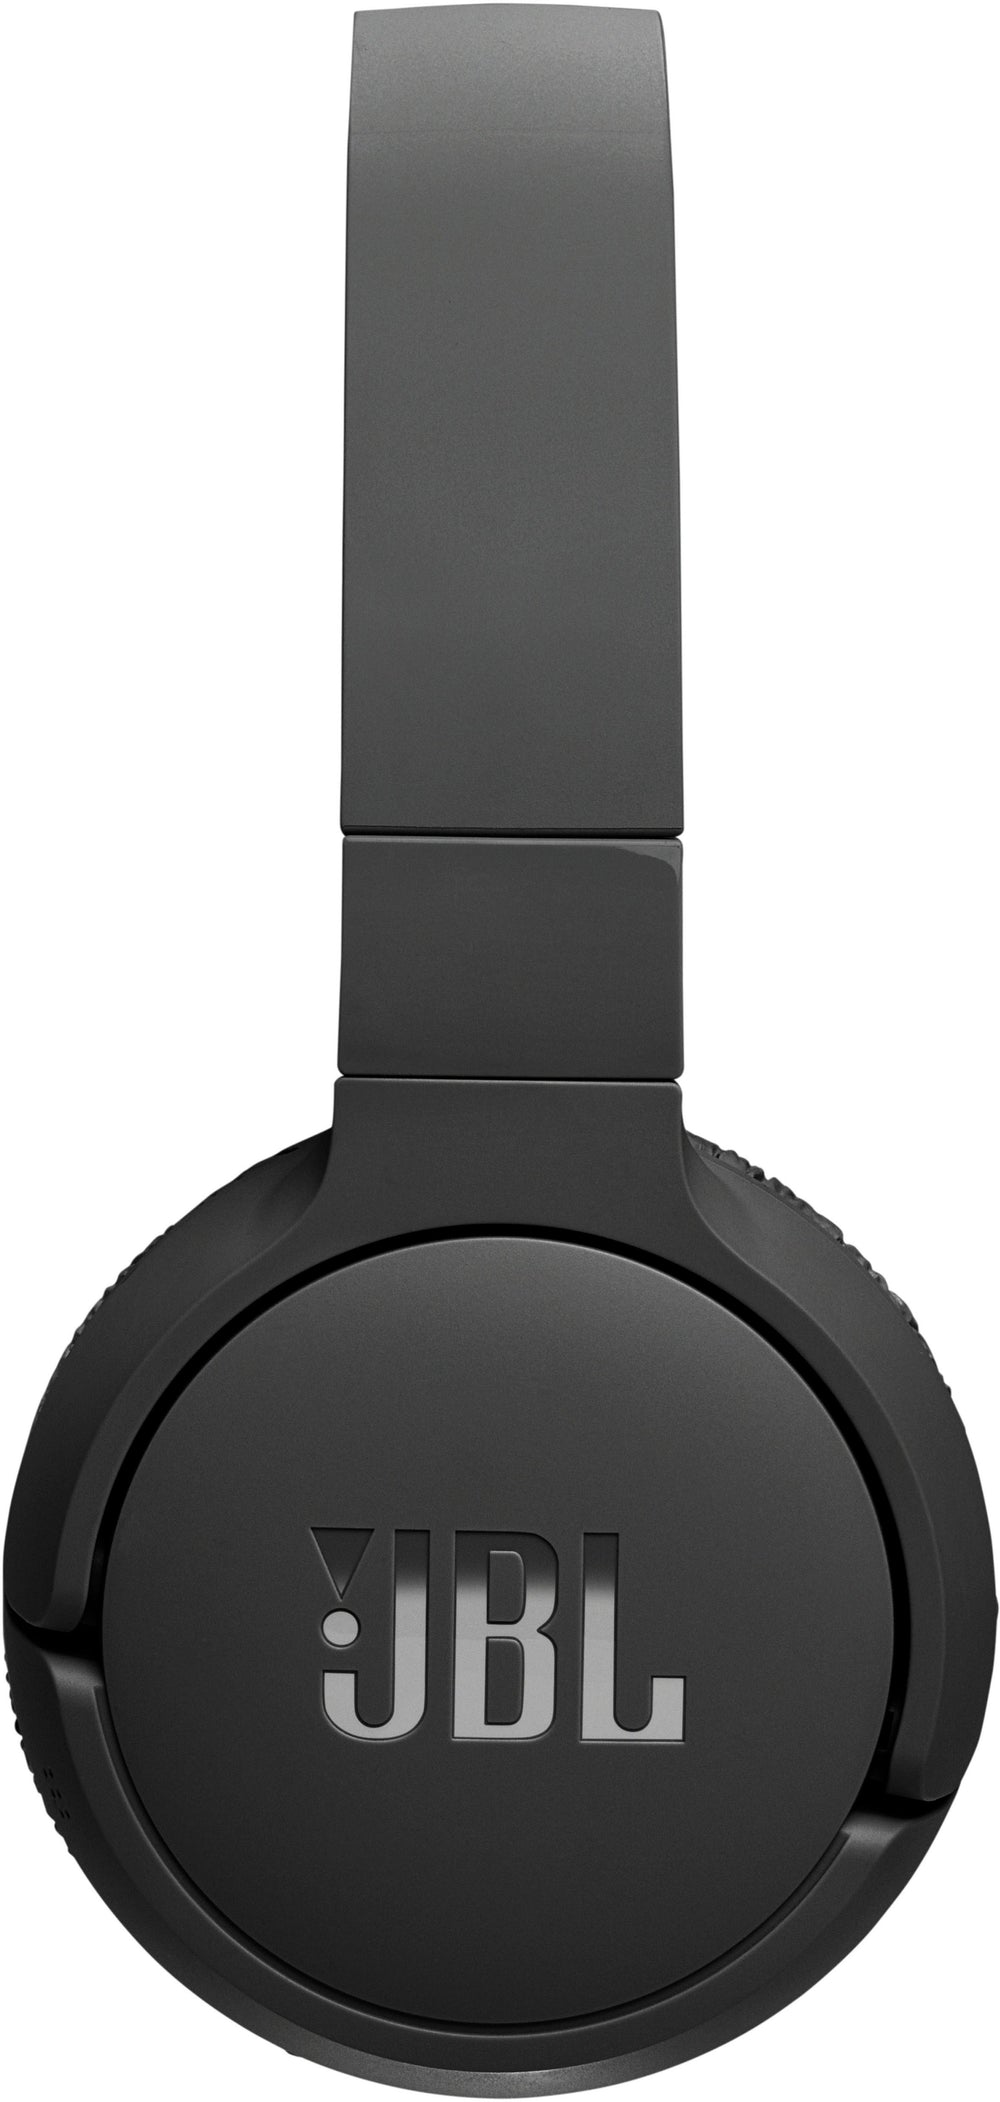 JBL - Adaptive Noise Cancelling Wireless On-Ear Headphone - Black_1